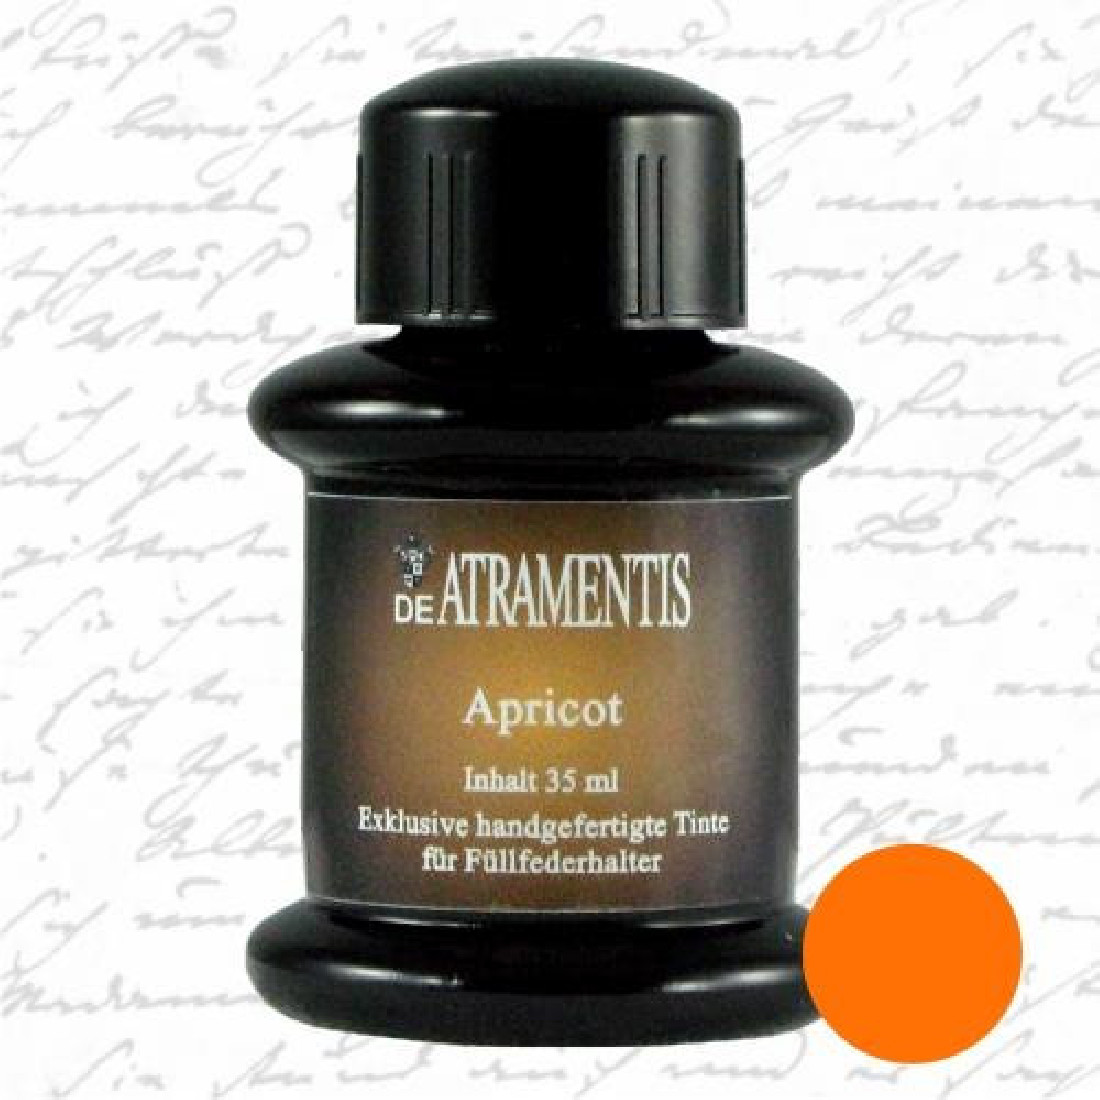 De Atramentis Apricot 45ml fountain pen standard ink